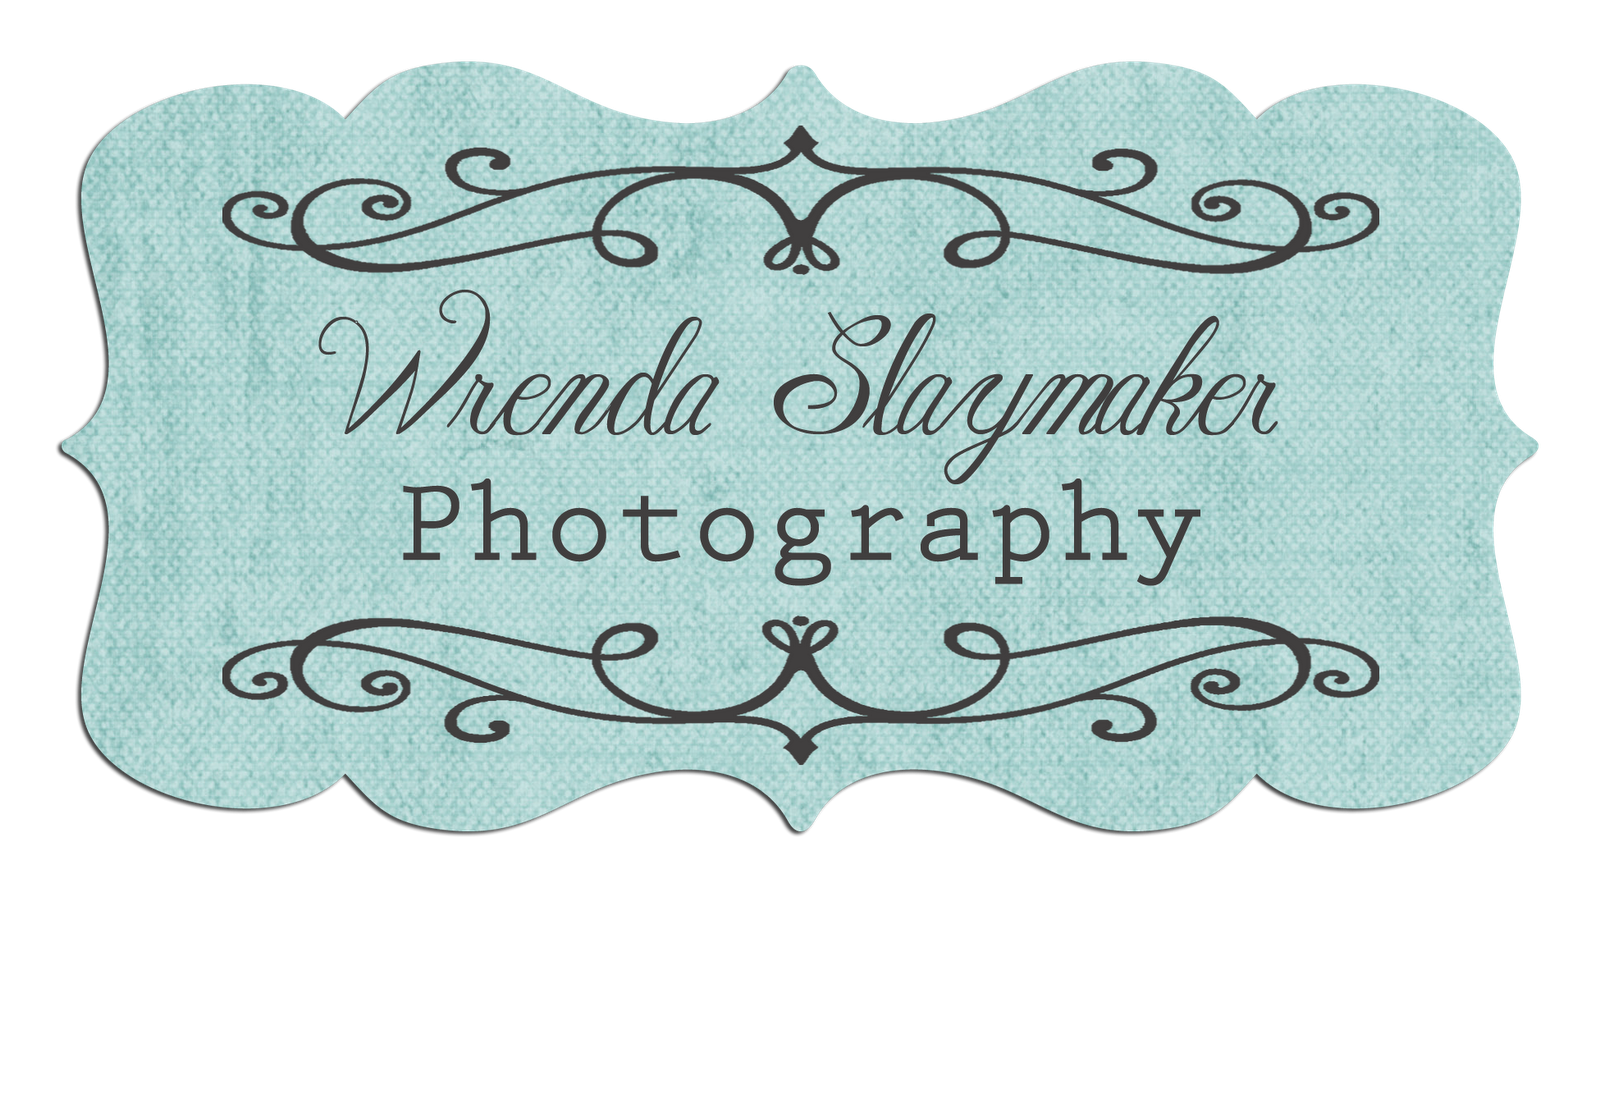 Wrenda Slaymaker Photography